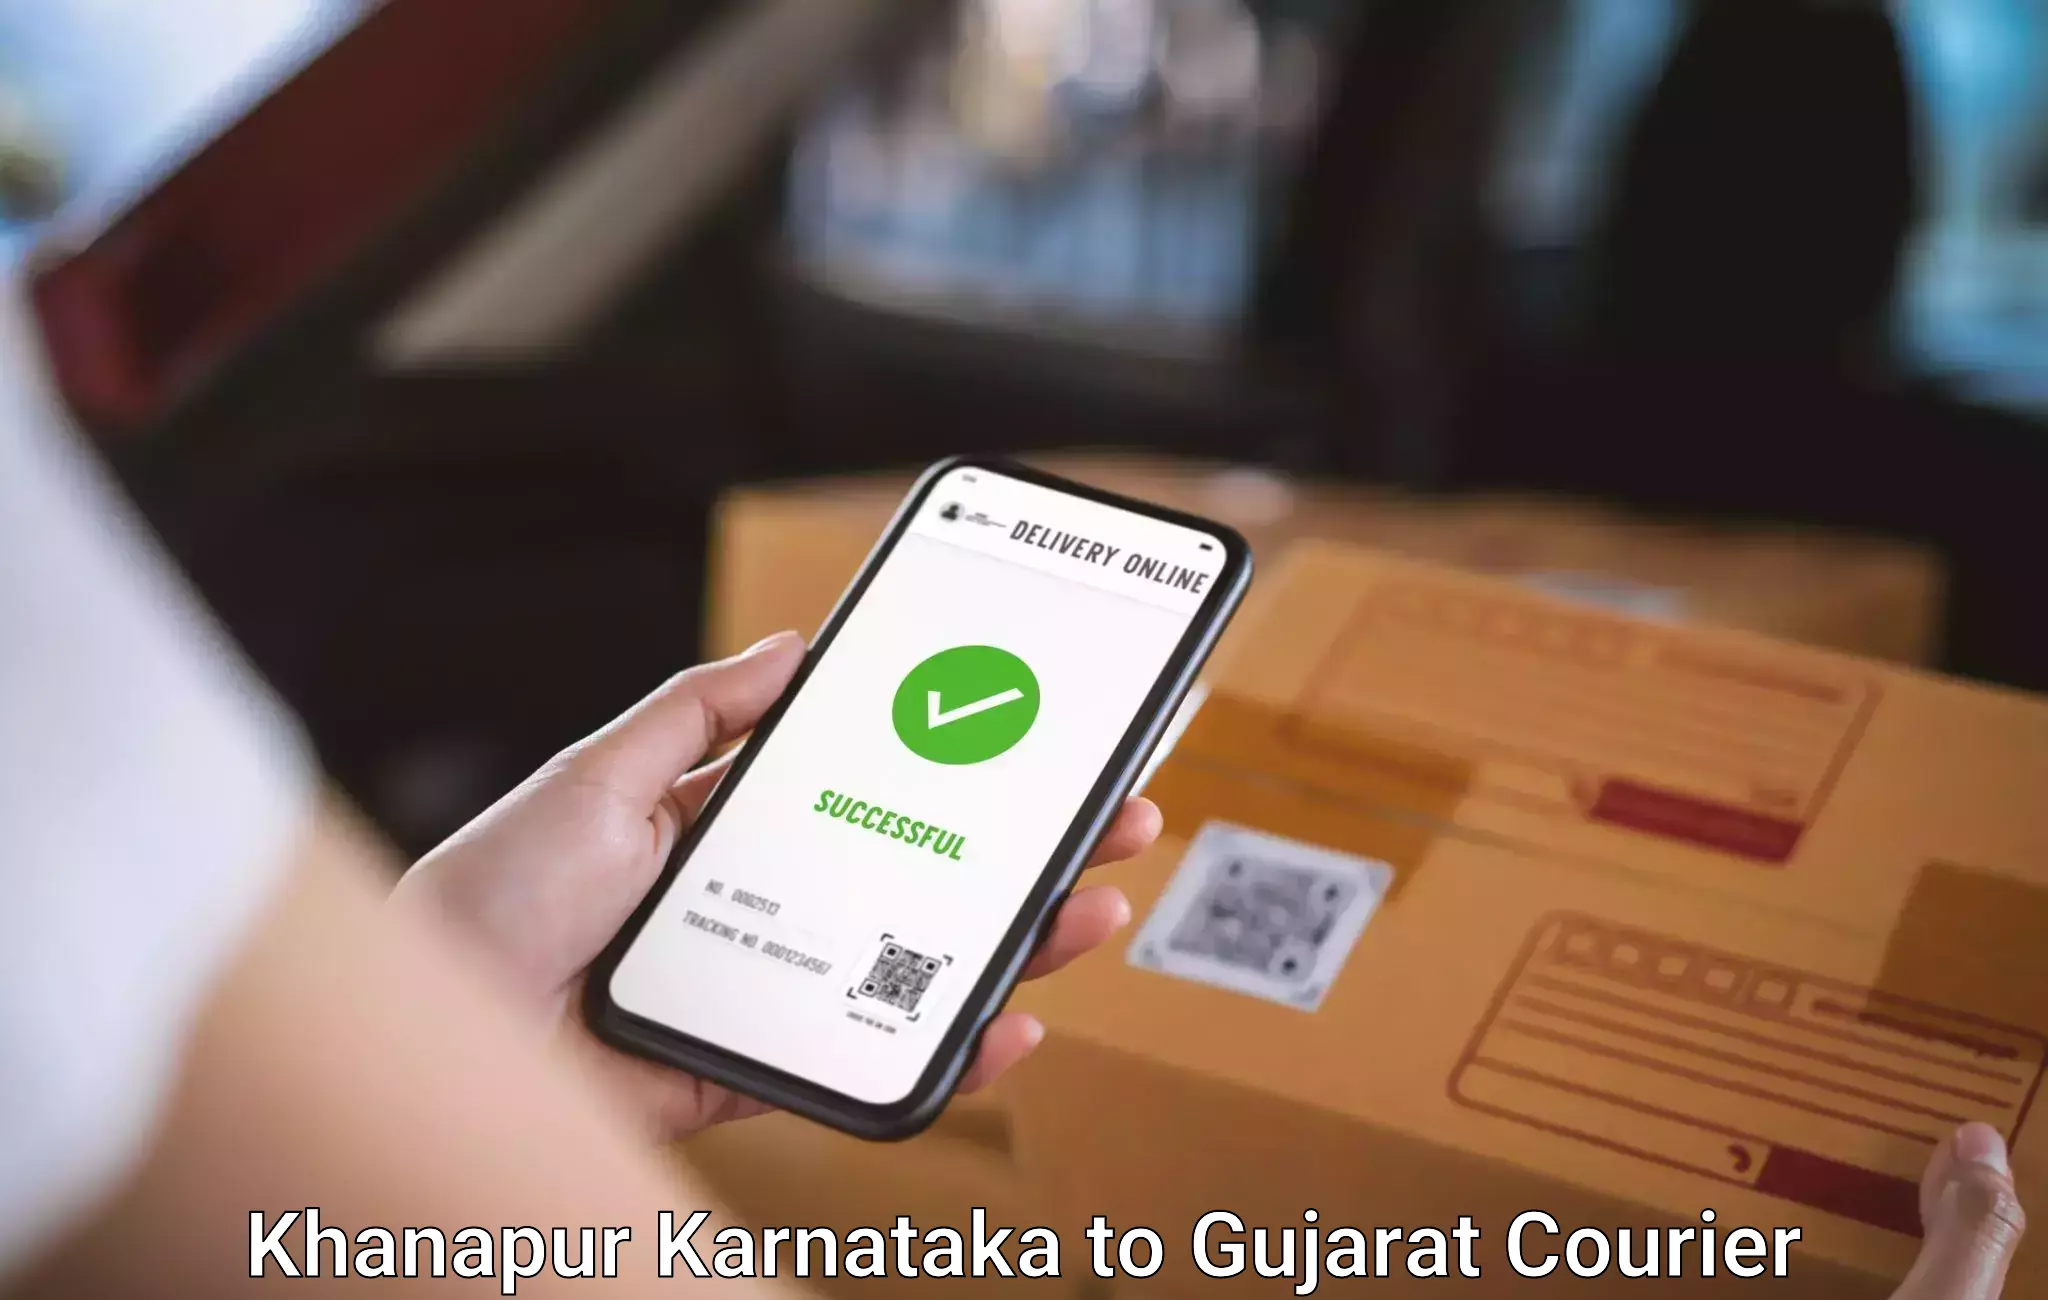 Luggage transport service Khanapur Karnataka to Vansda